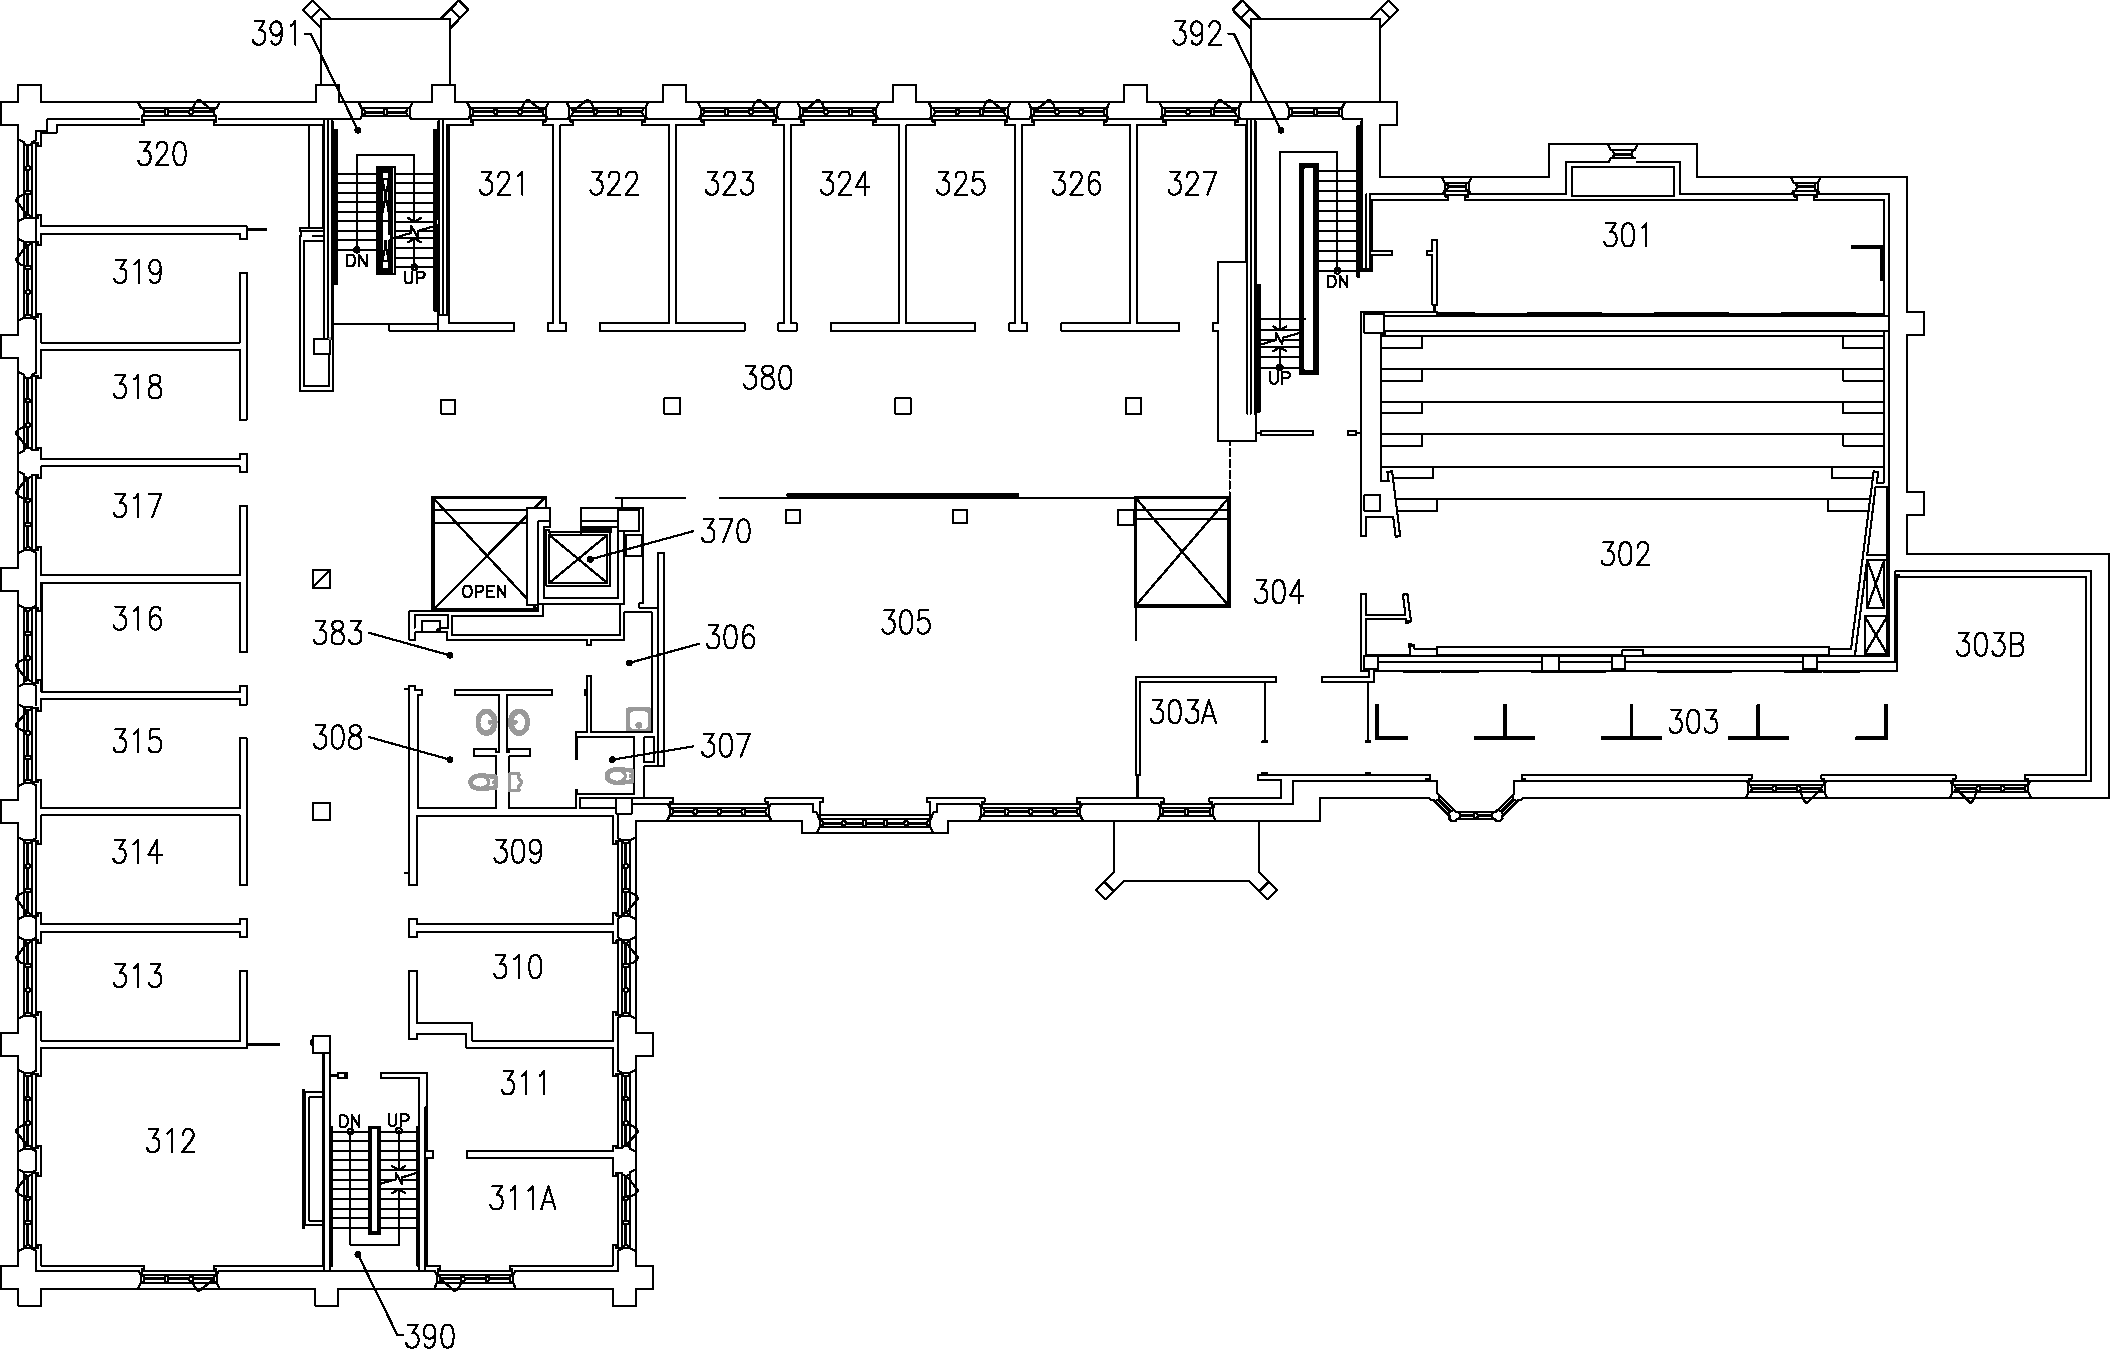 Mcmaster University Hamilton Hall Third Floor Map